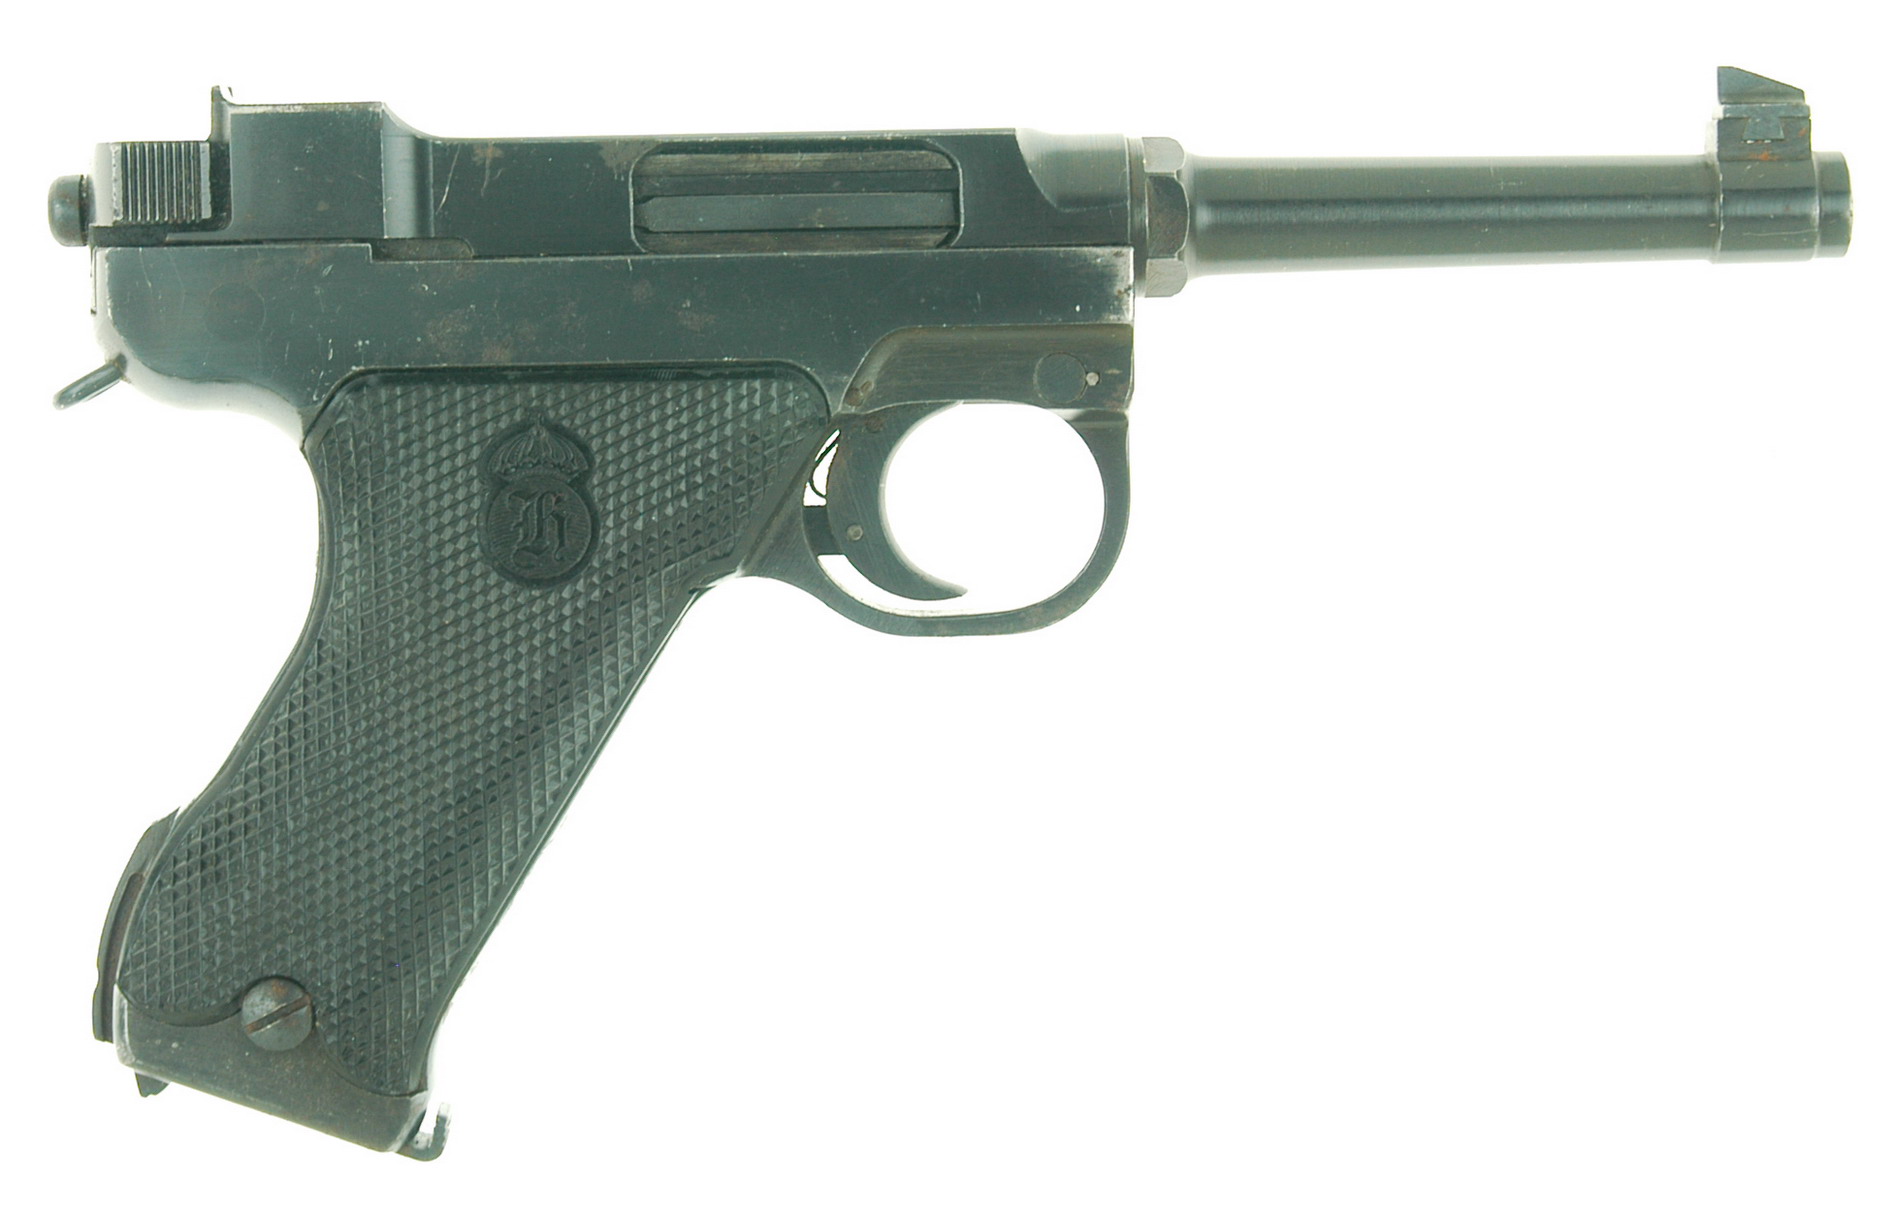 The Husqvarna M 40 Pistol